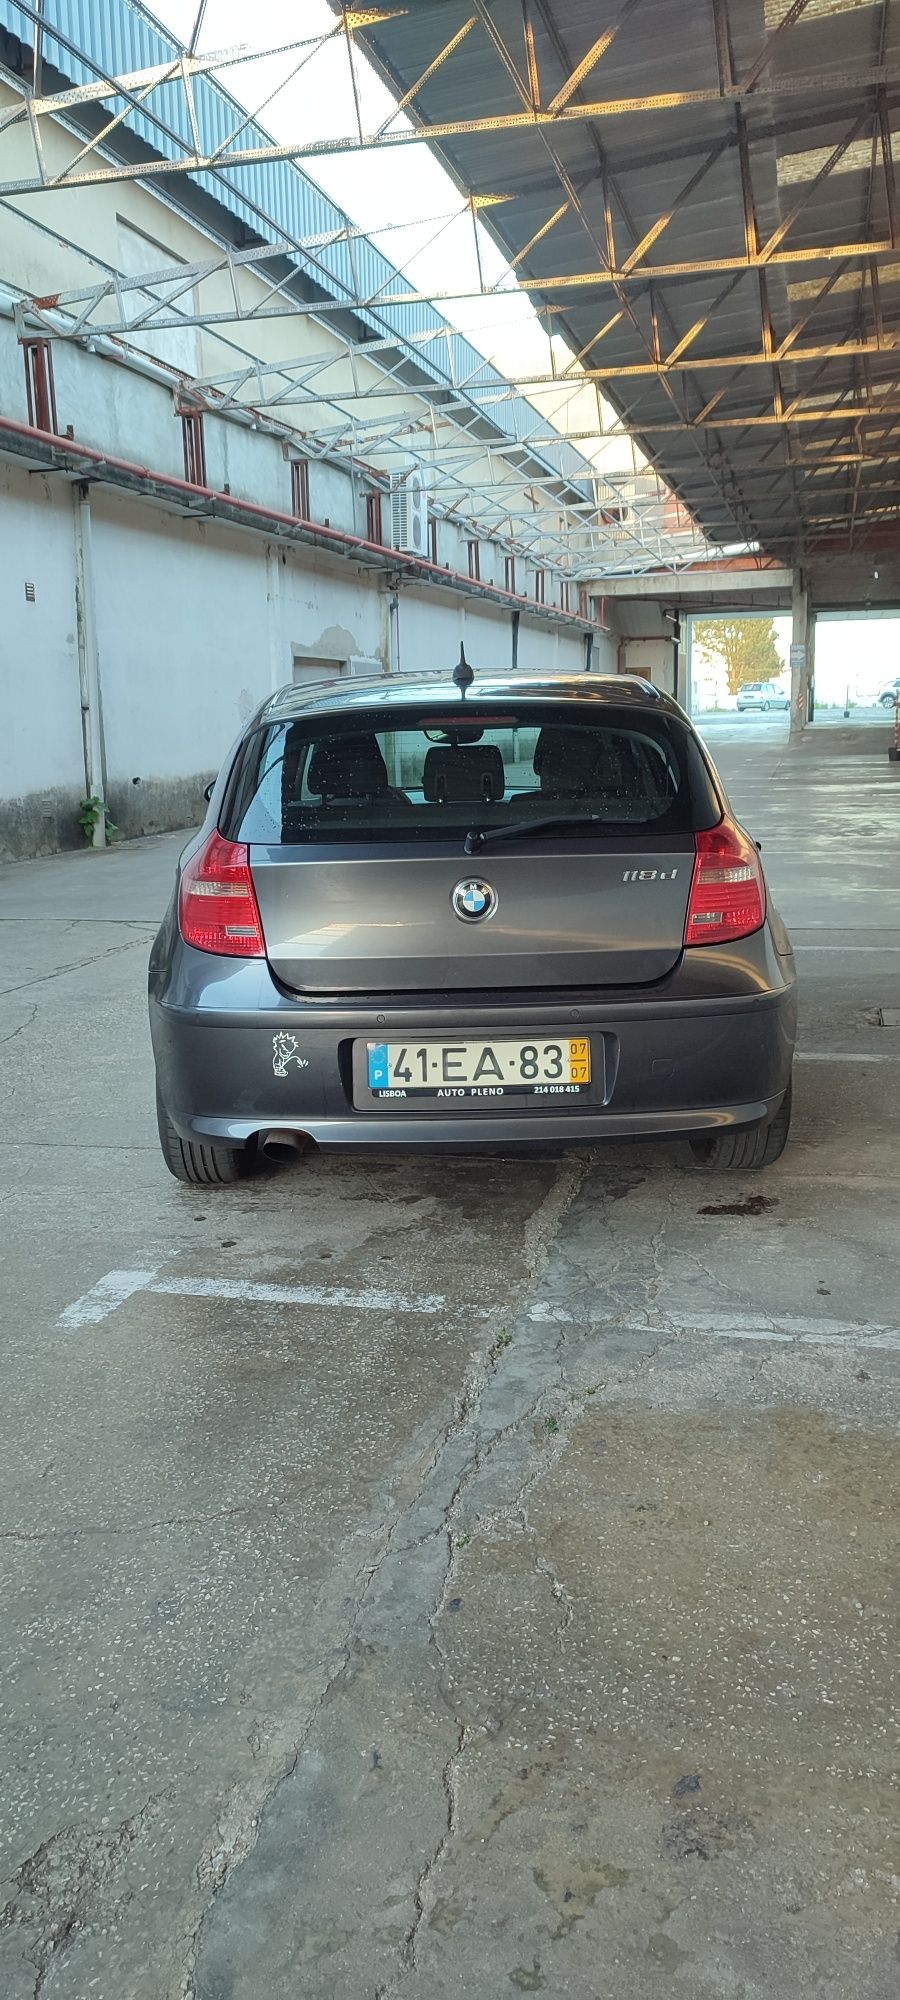 BMW 118d 2.0 143cv 2007